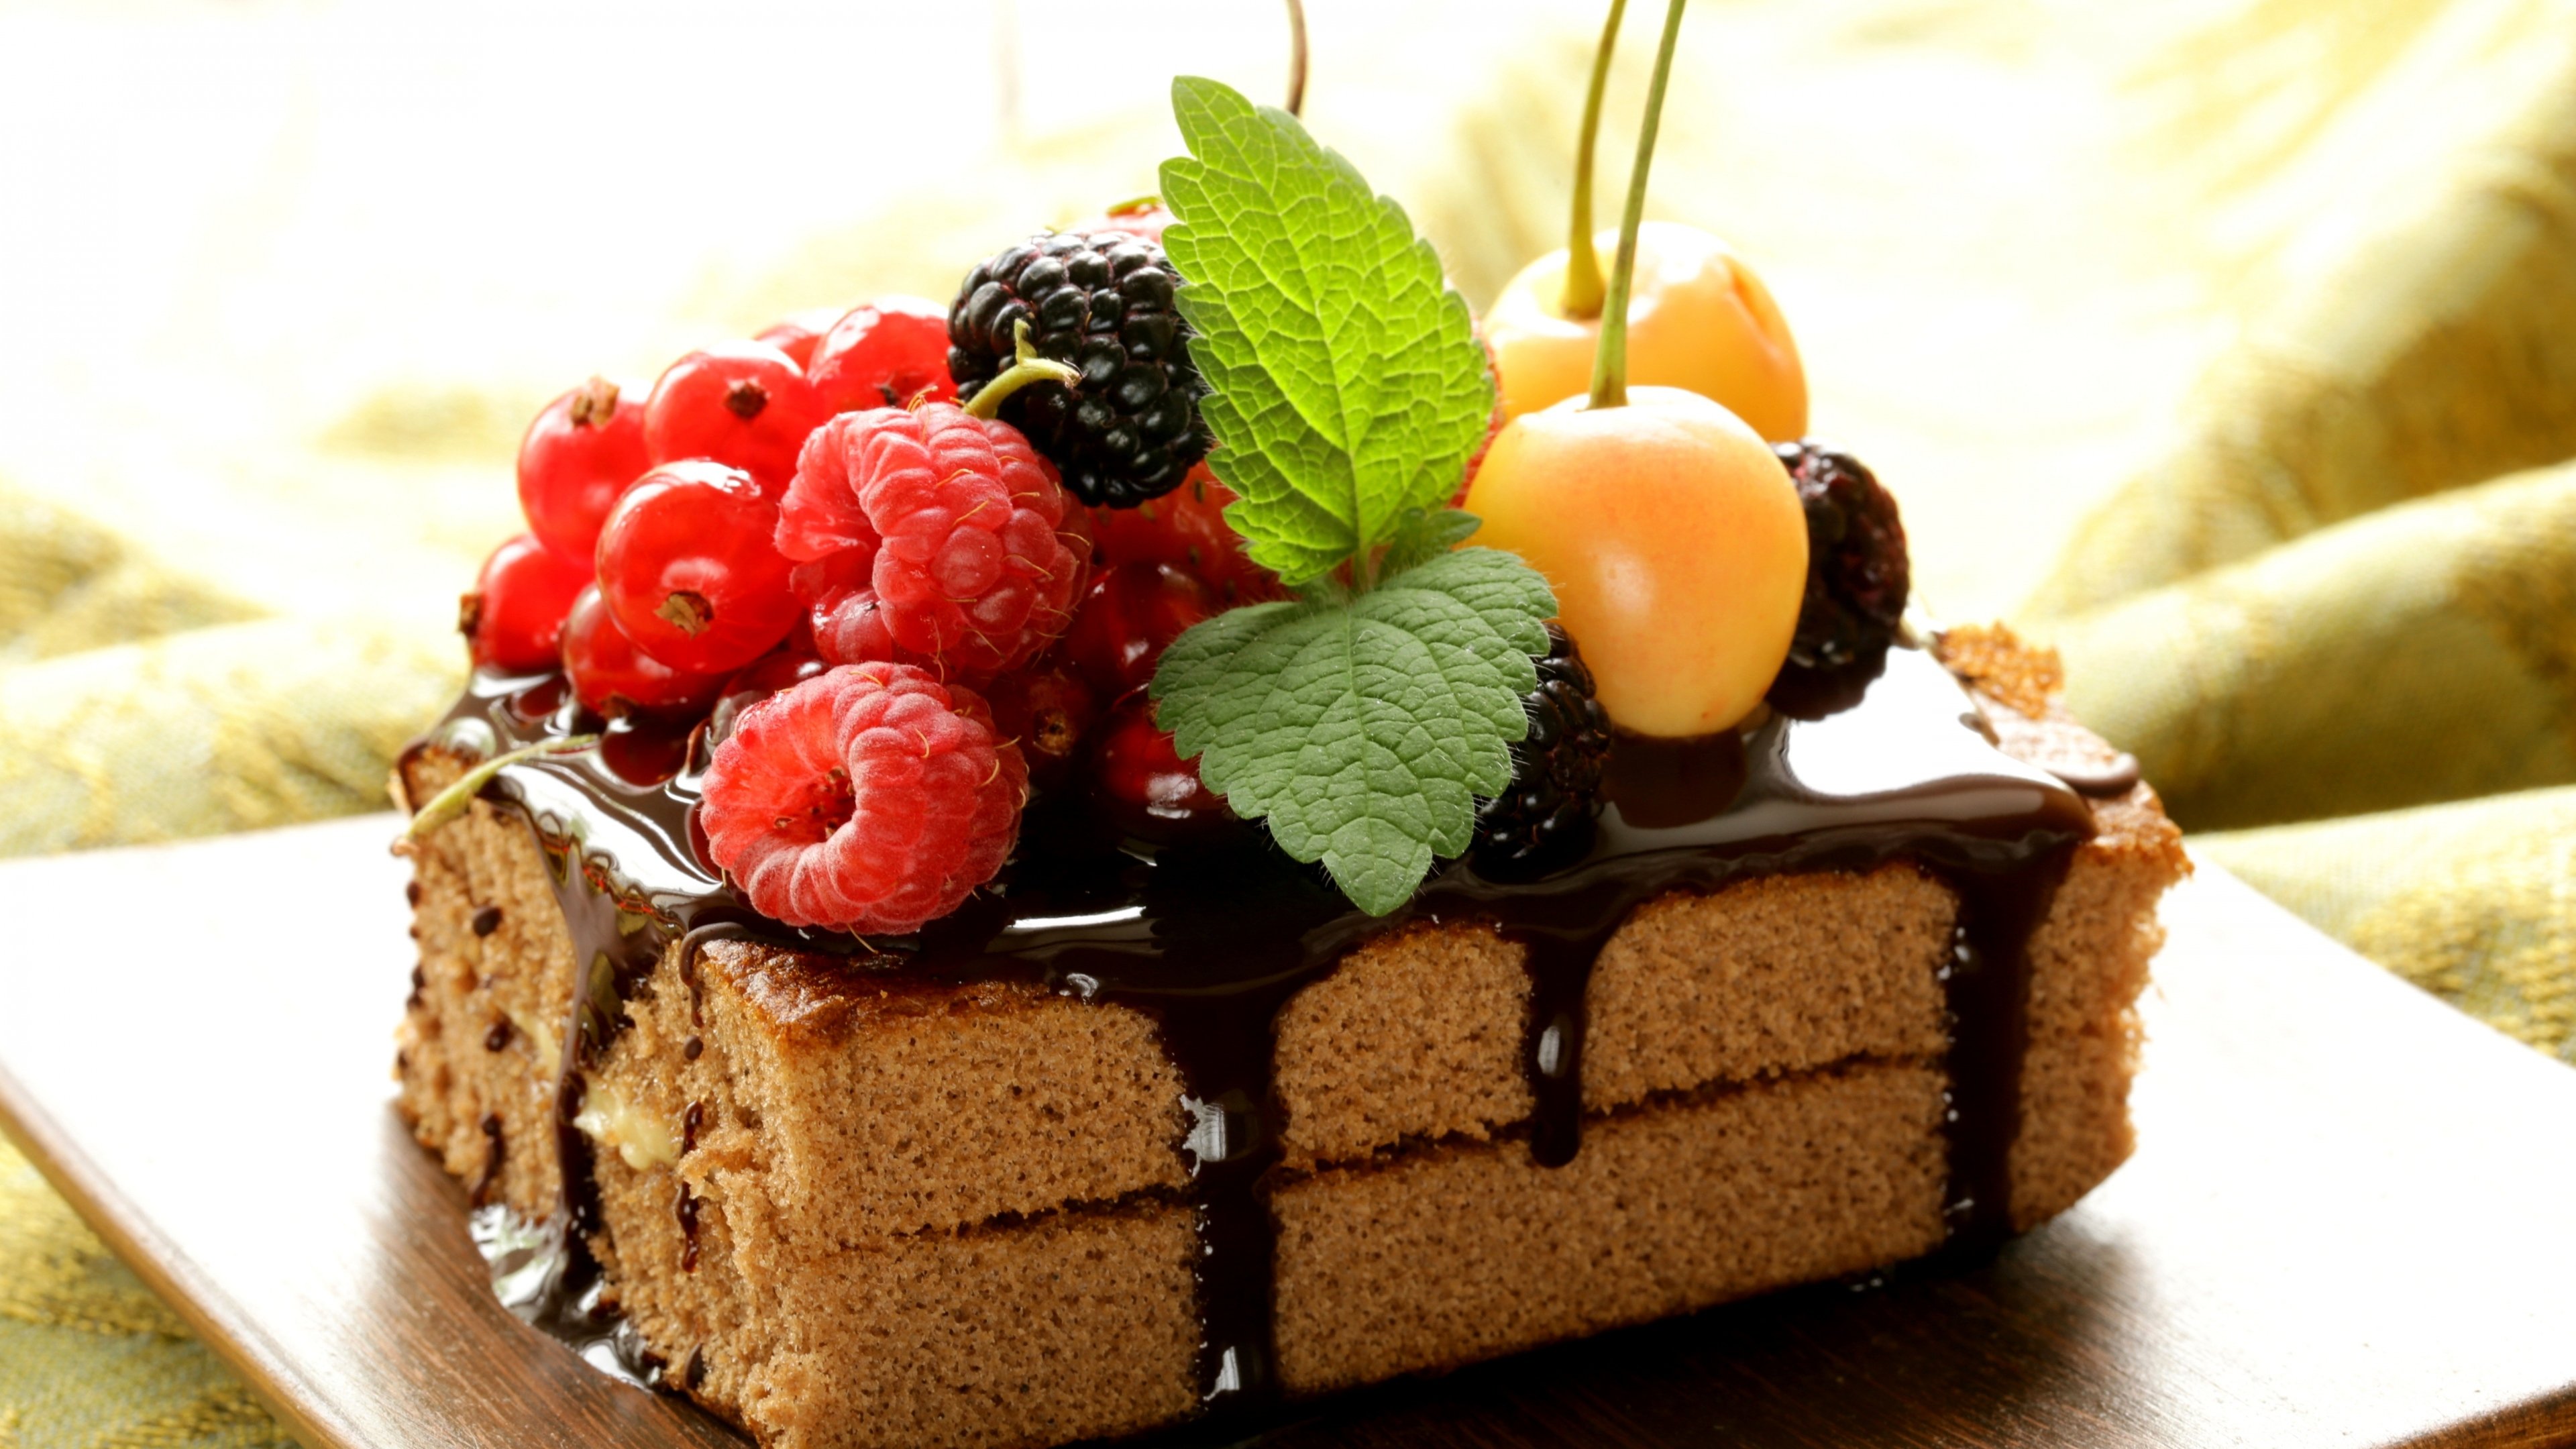 Wallpaper, 3840x2160 px, cake, chocolate, food, fruit 3840x2160